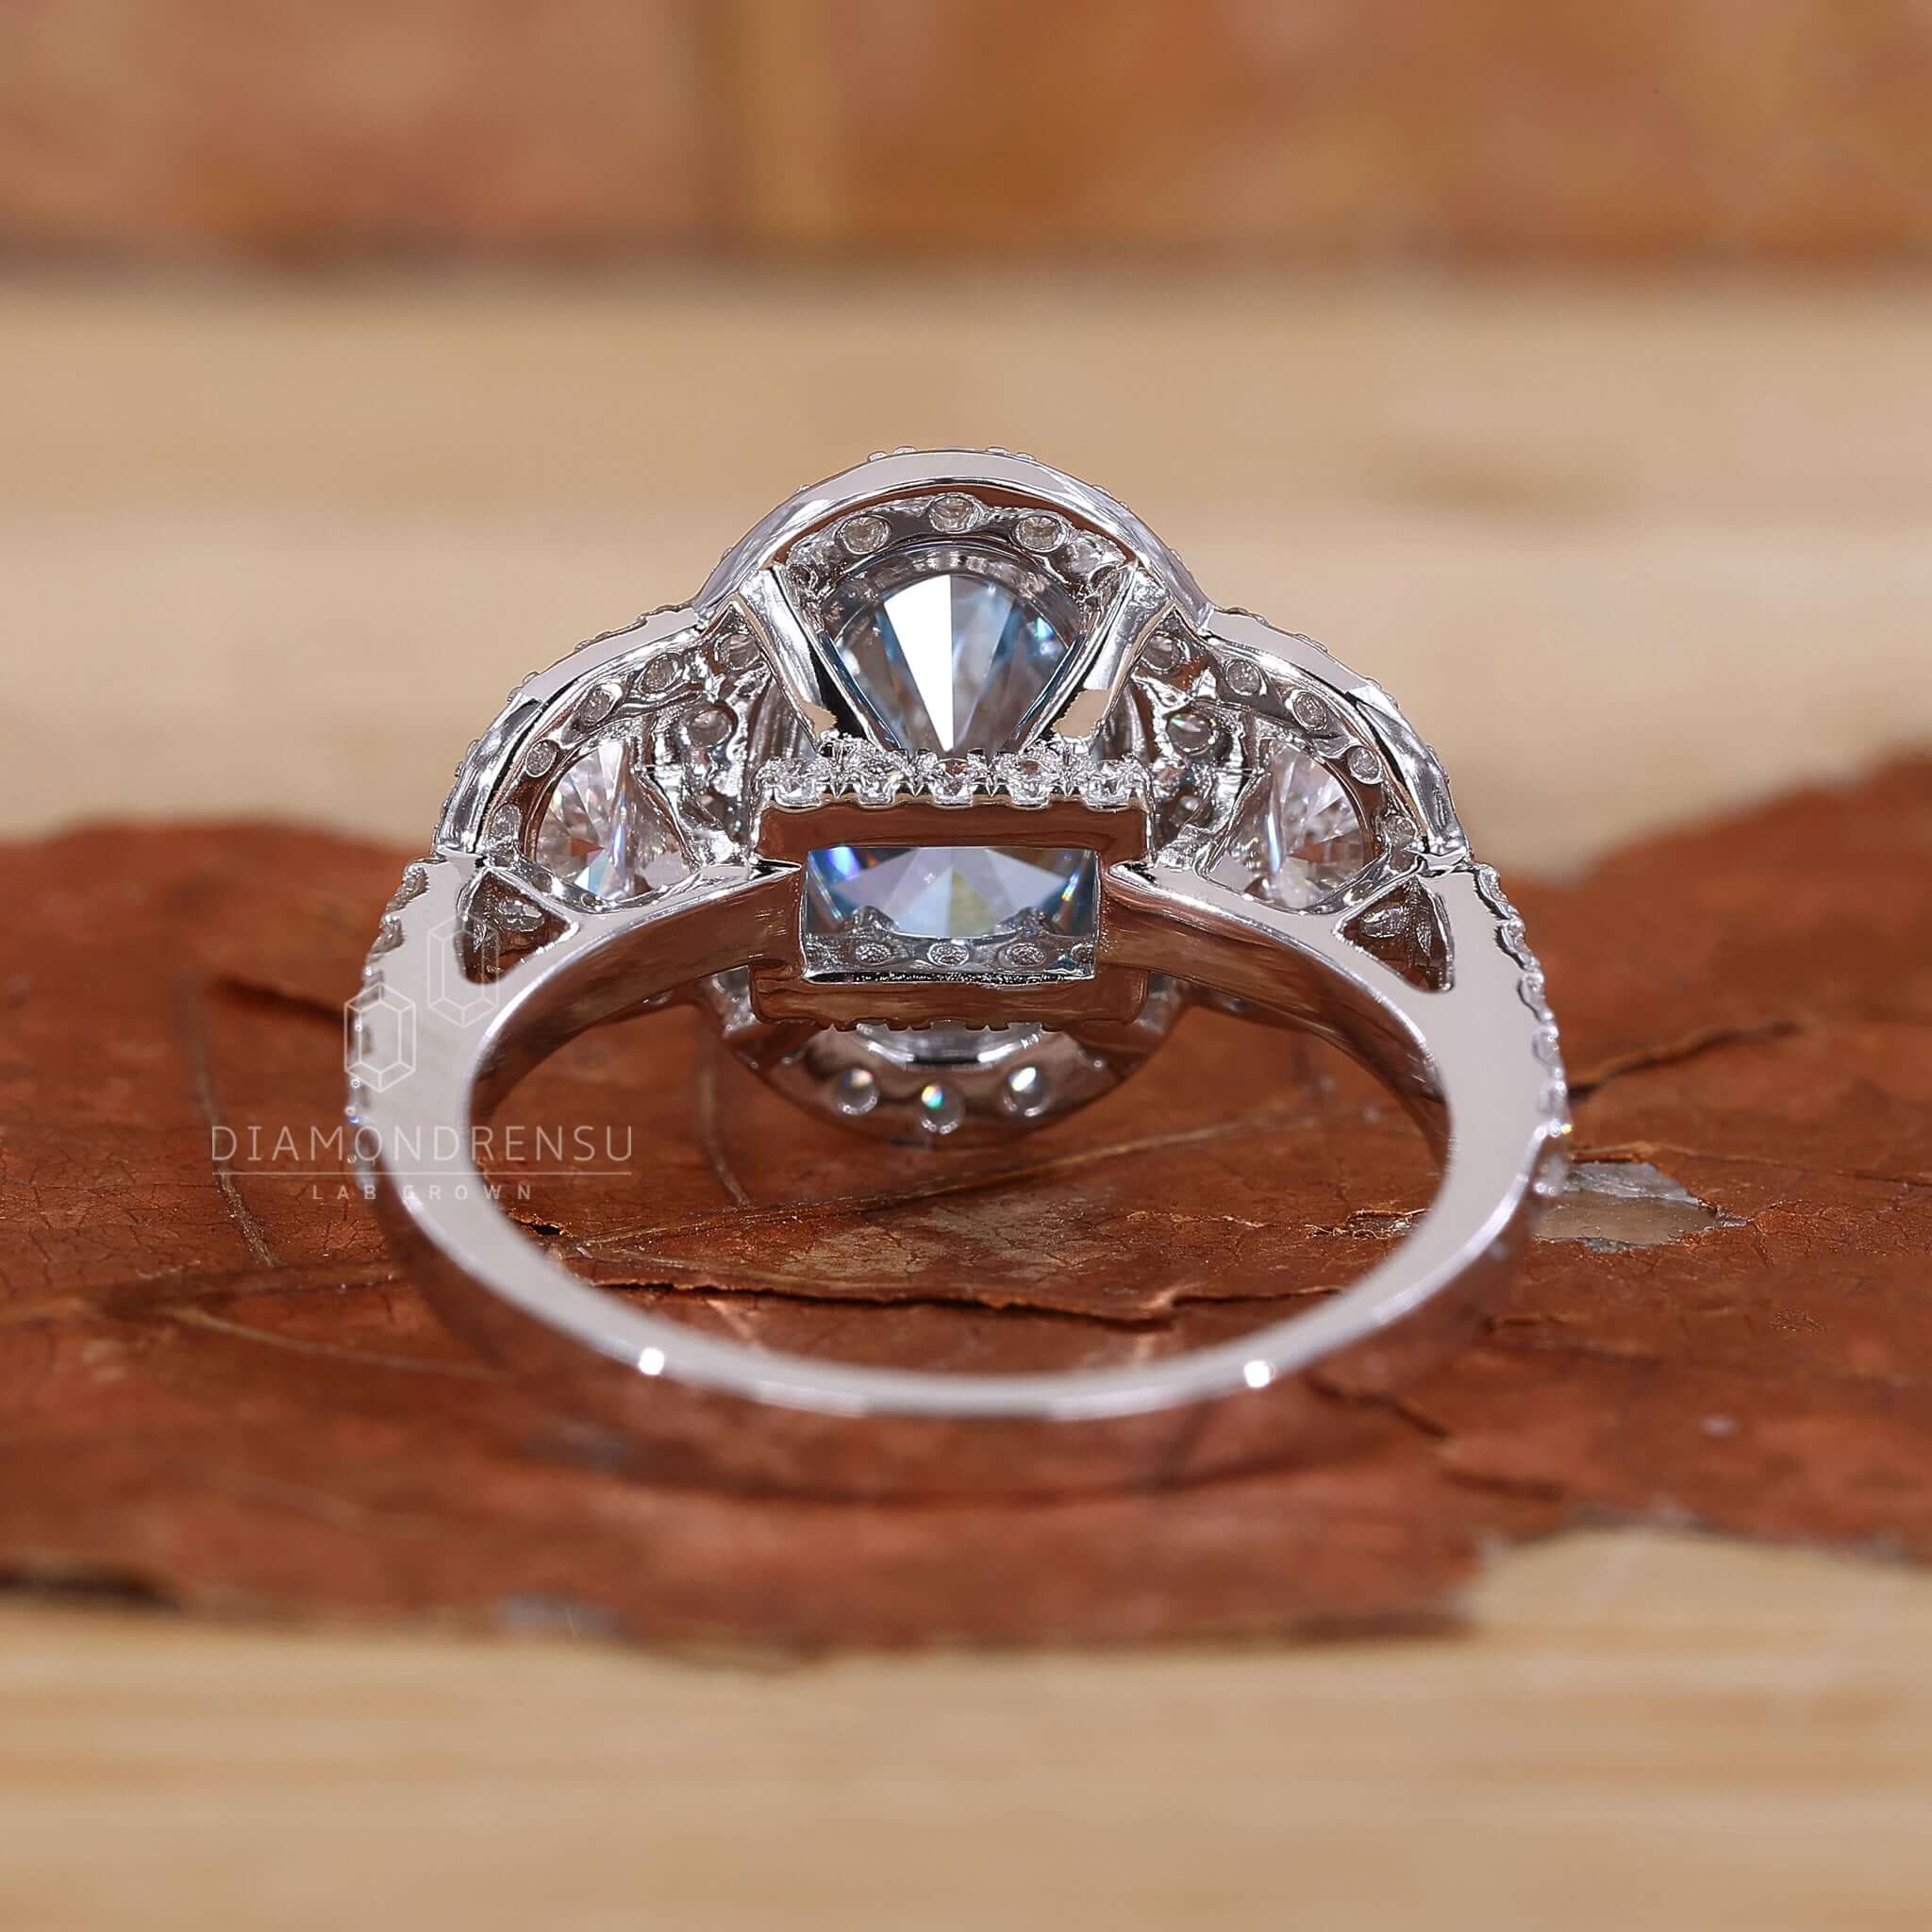 Unique Anniversary Gifts - premium diamond rings selection